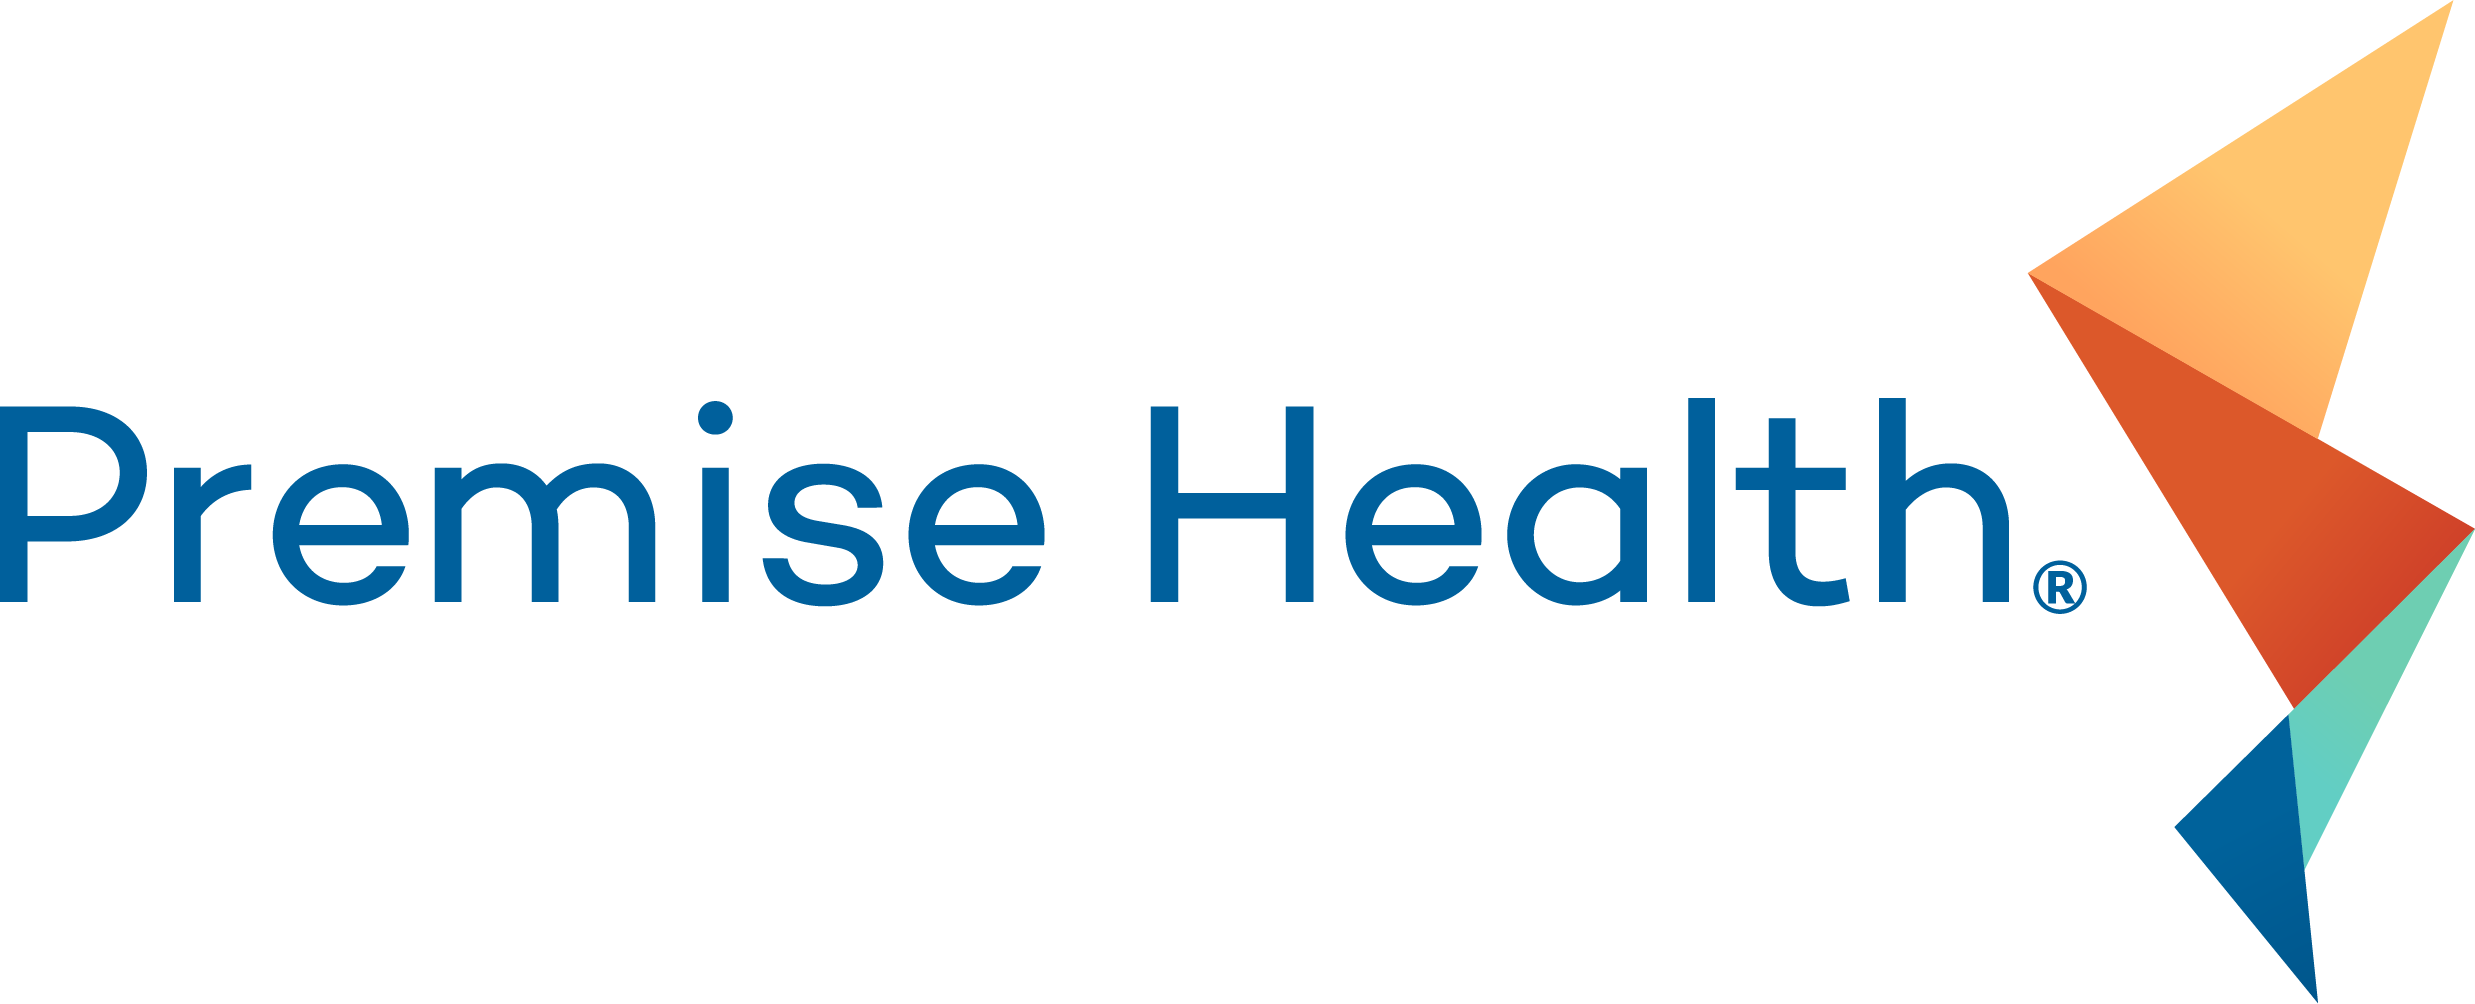 Large Premise Health logo